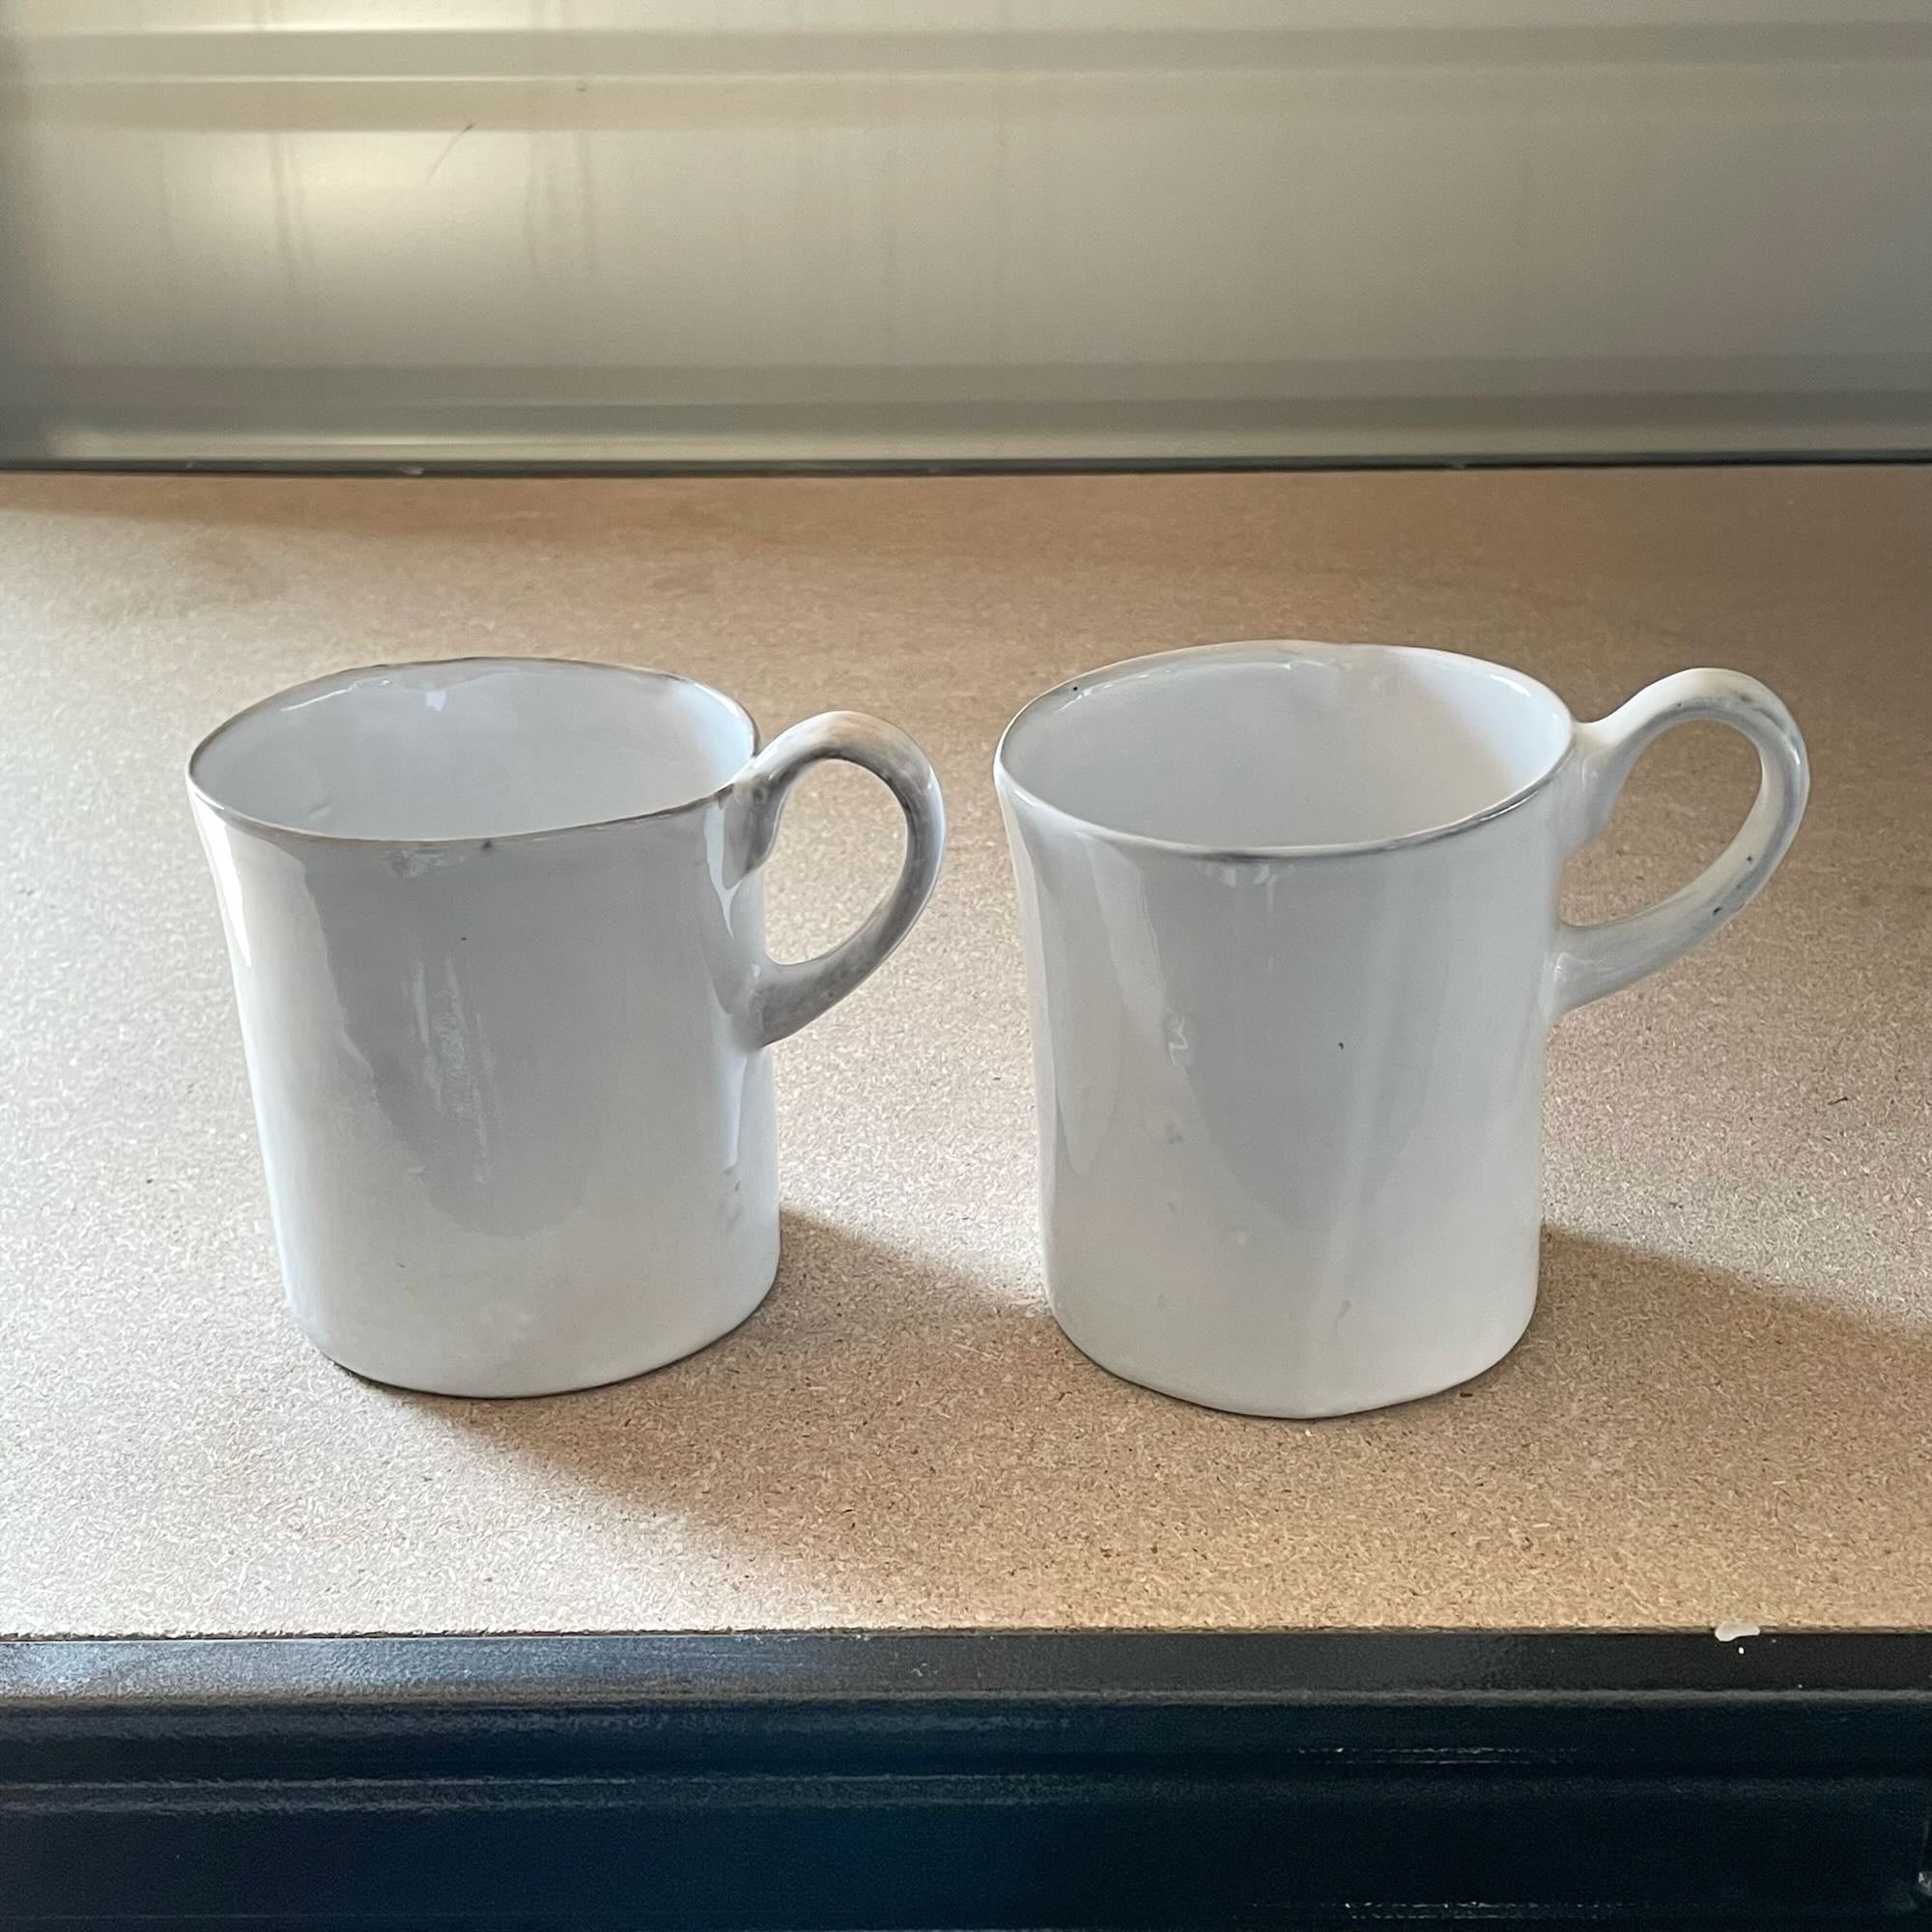 2x Paris mugs with handle